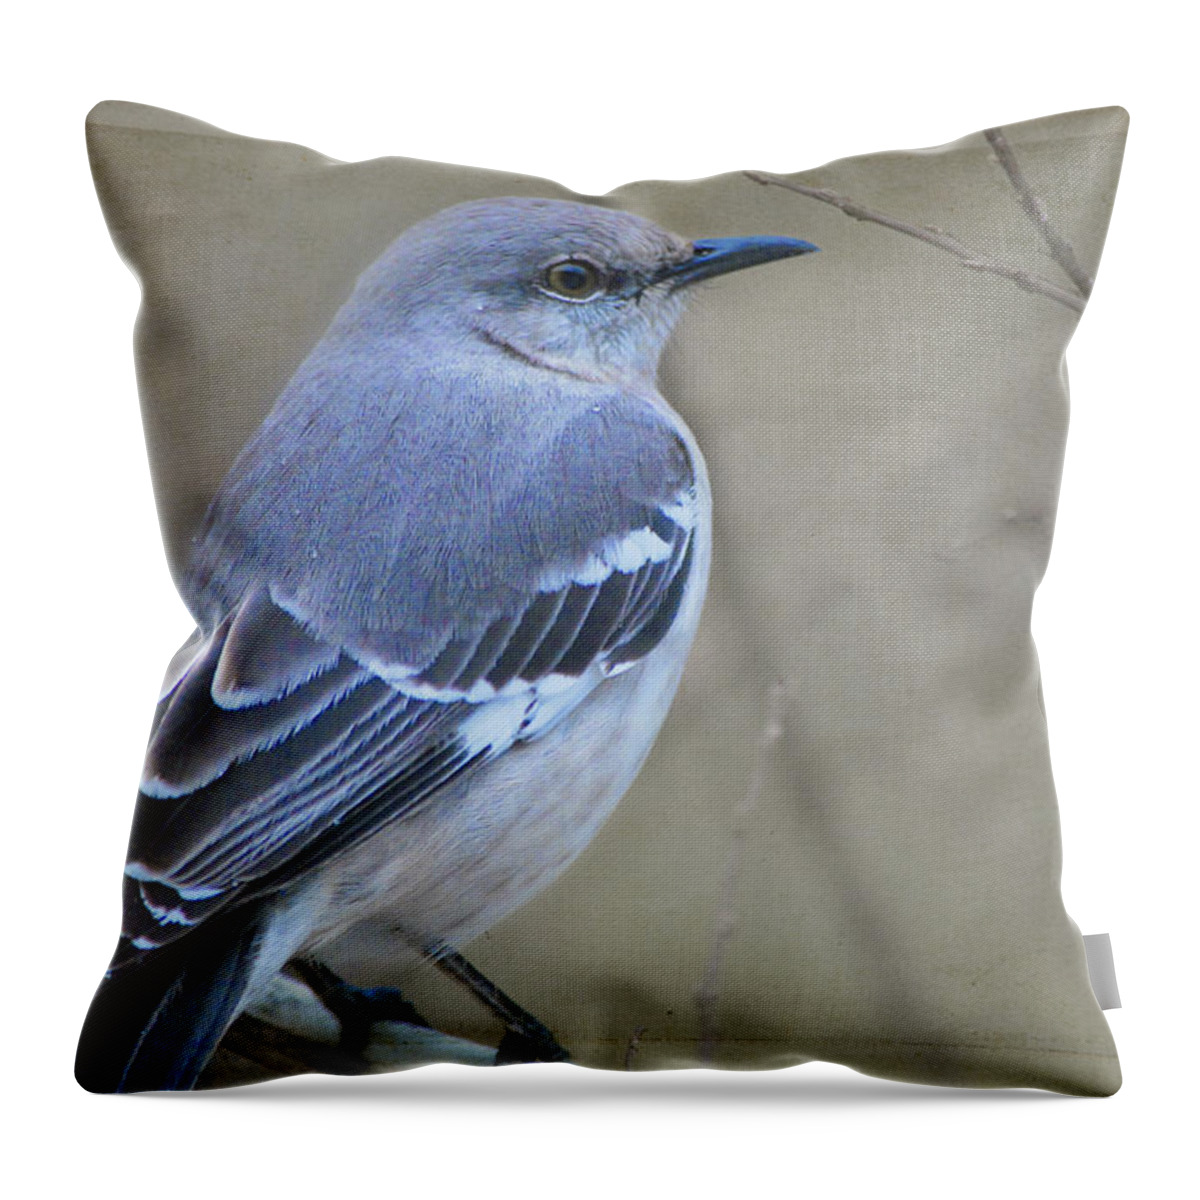 Bird Throw Pillow featuring the photograph Blue Bird by Linda Segerson